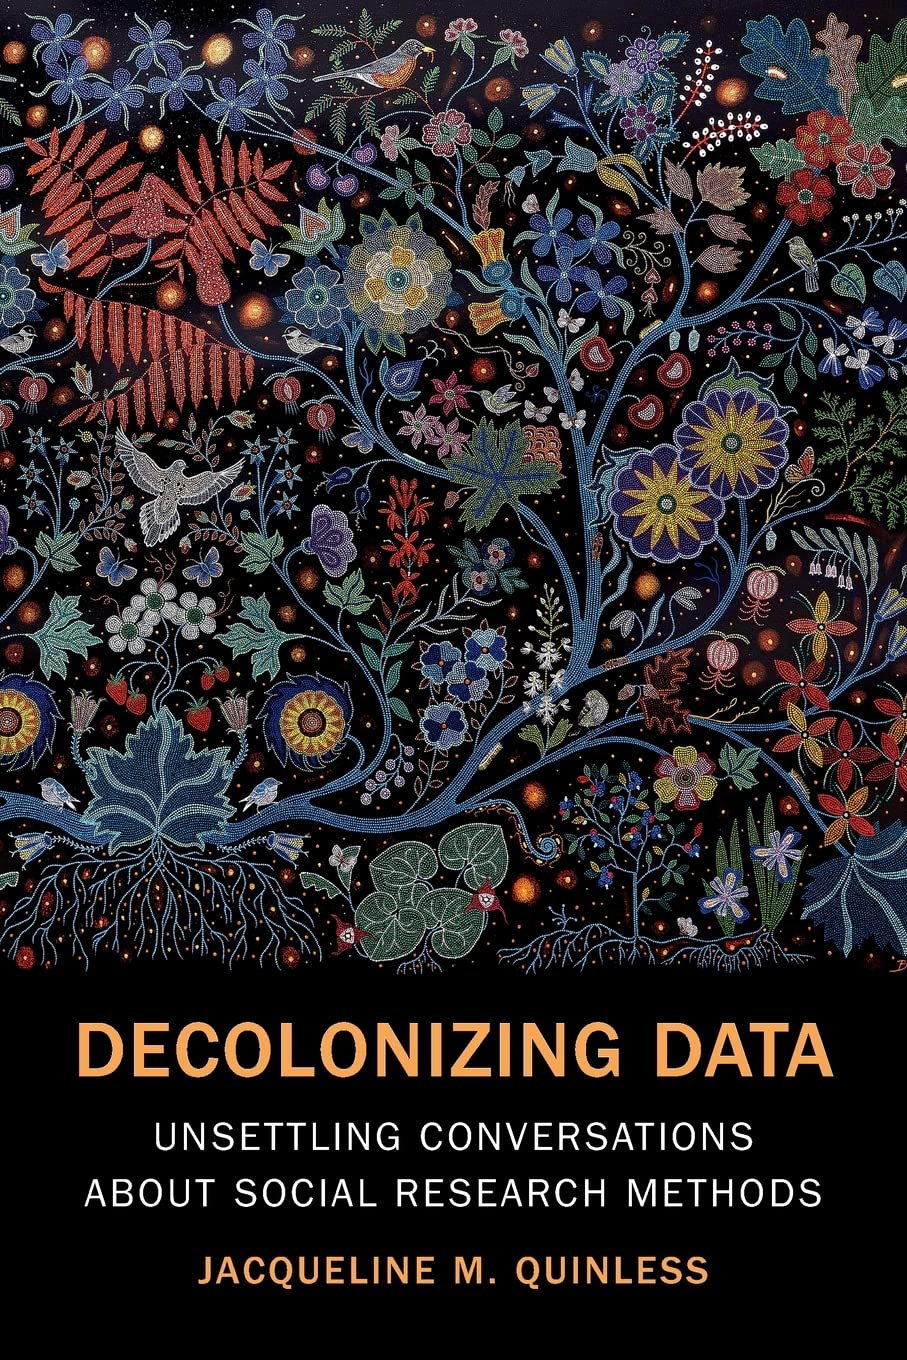 Decolonizing Data: Unsettling Conversations About Social Research Methods [Jacqueline M. Quinless]